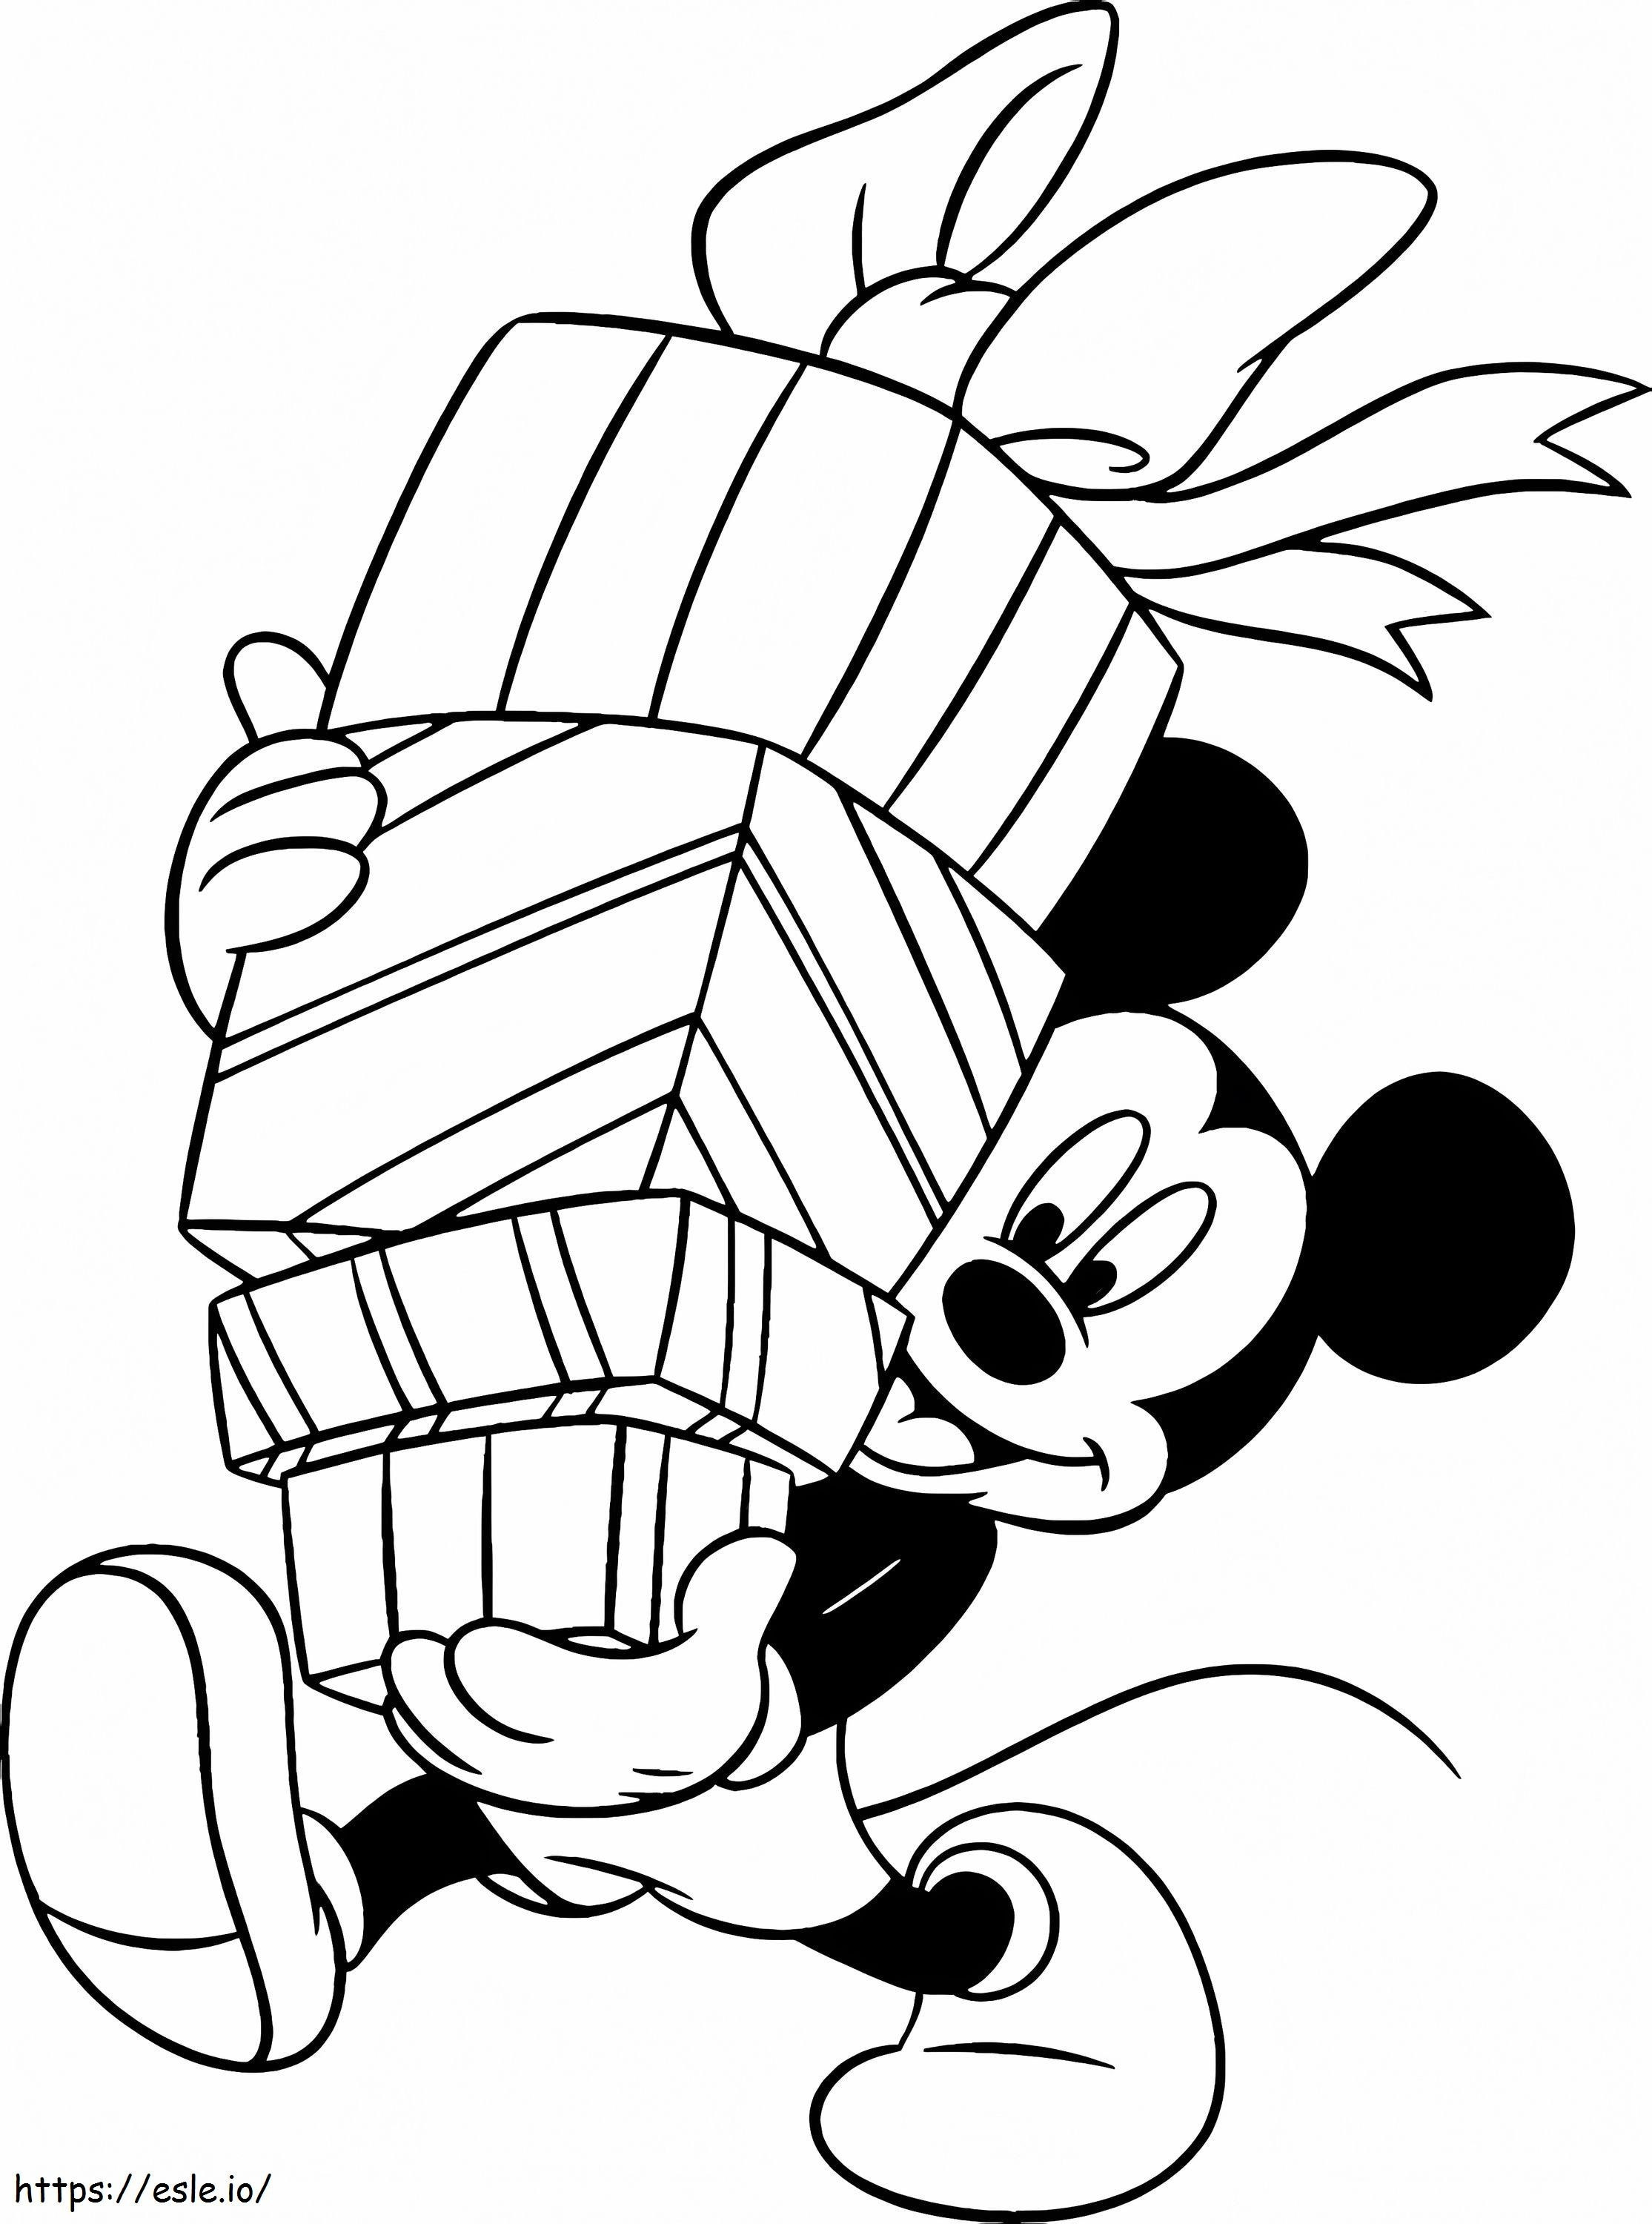 Mickey Mouse com presentes para colorir